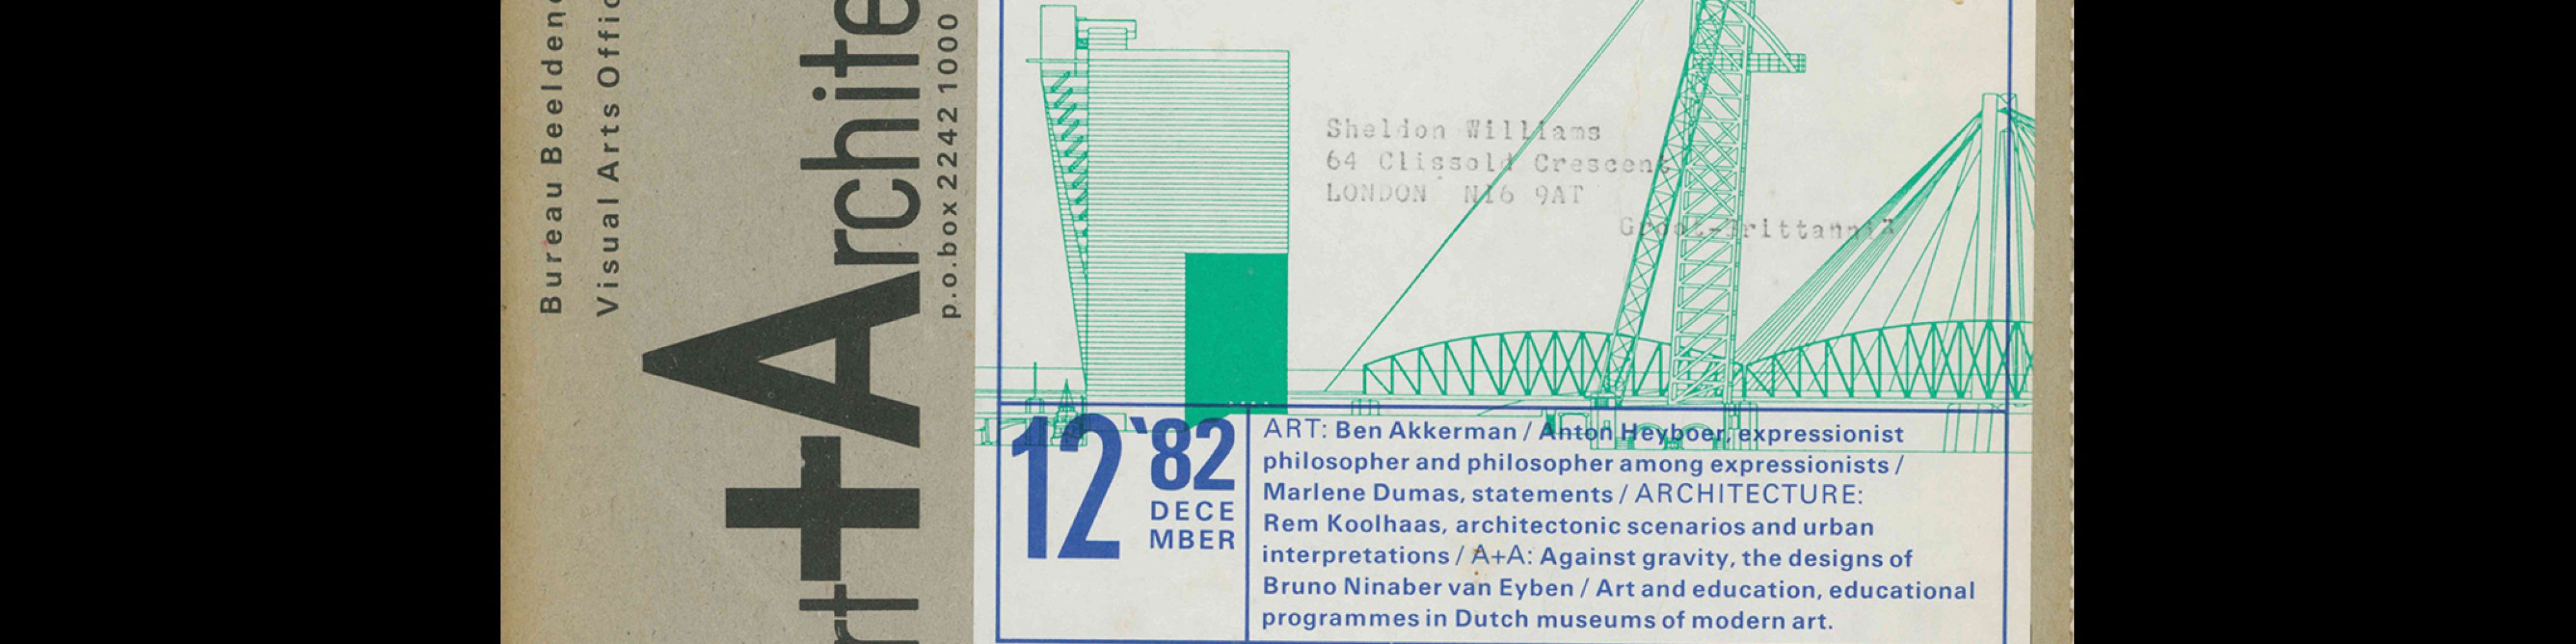 Dutch Art + Architecture Today 12, 1982. Designed by Jan van Toorn